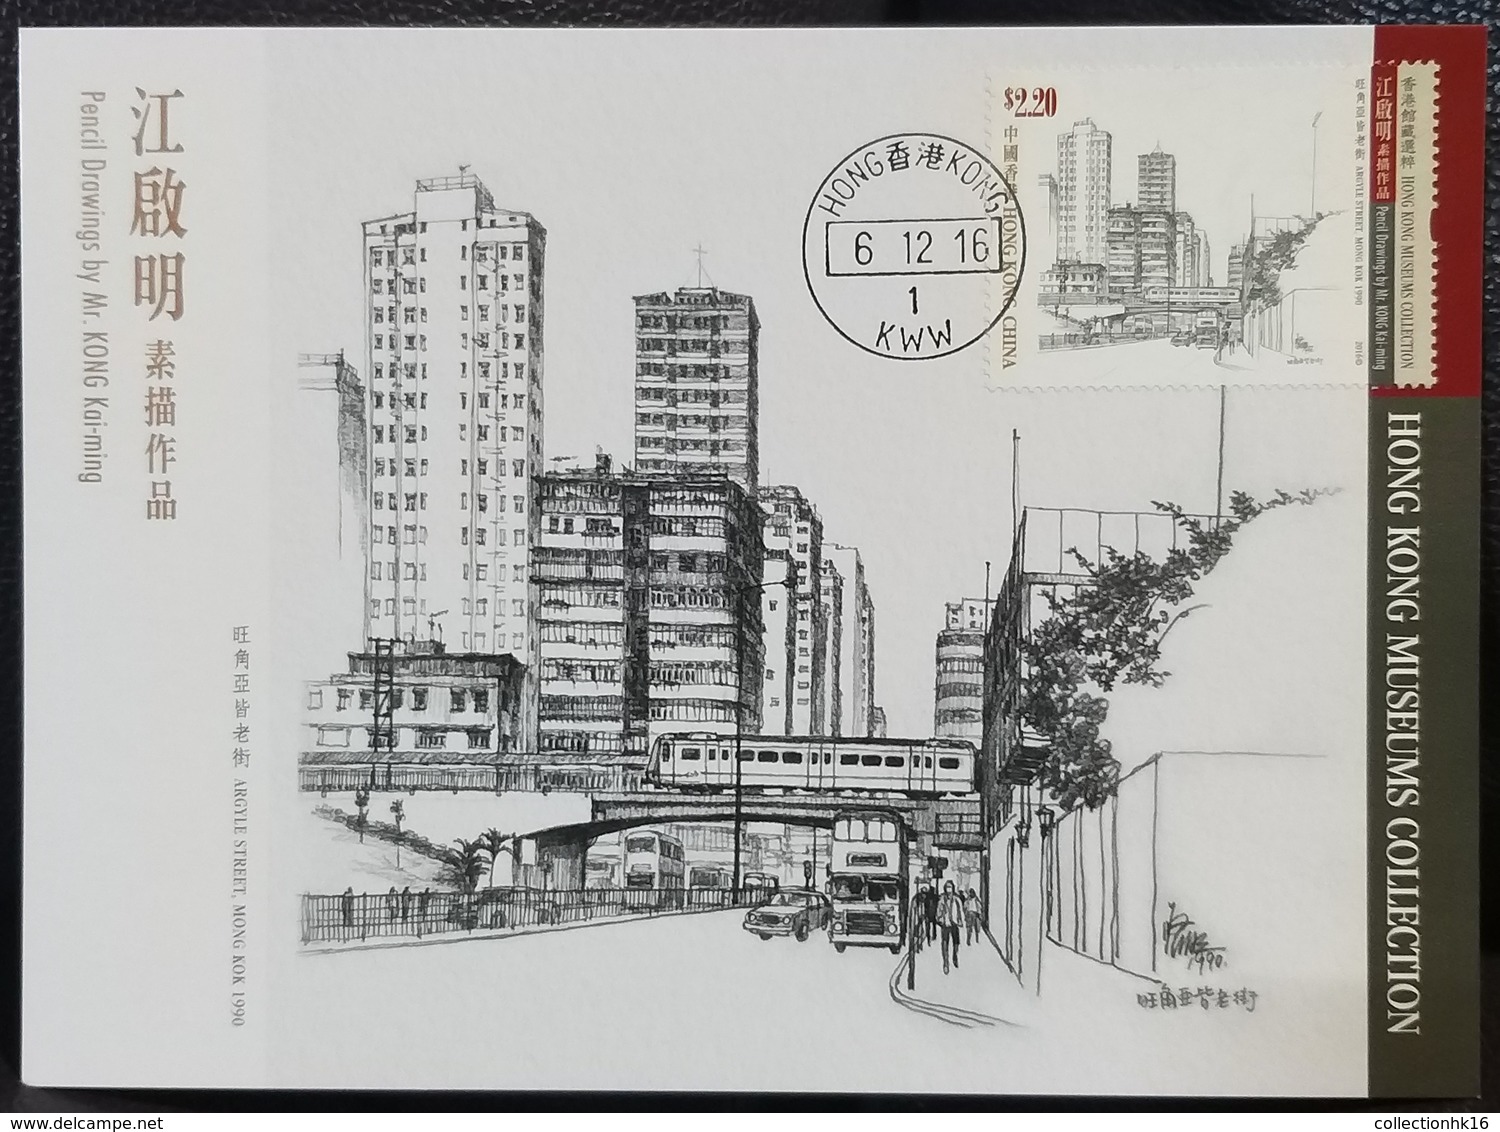 White Pencil for Black Cards -  Hong Kong